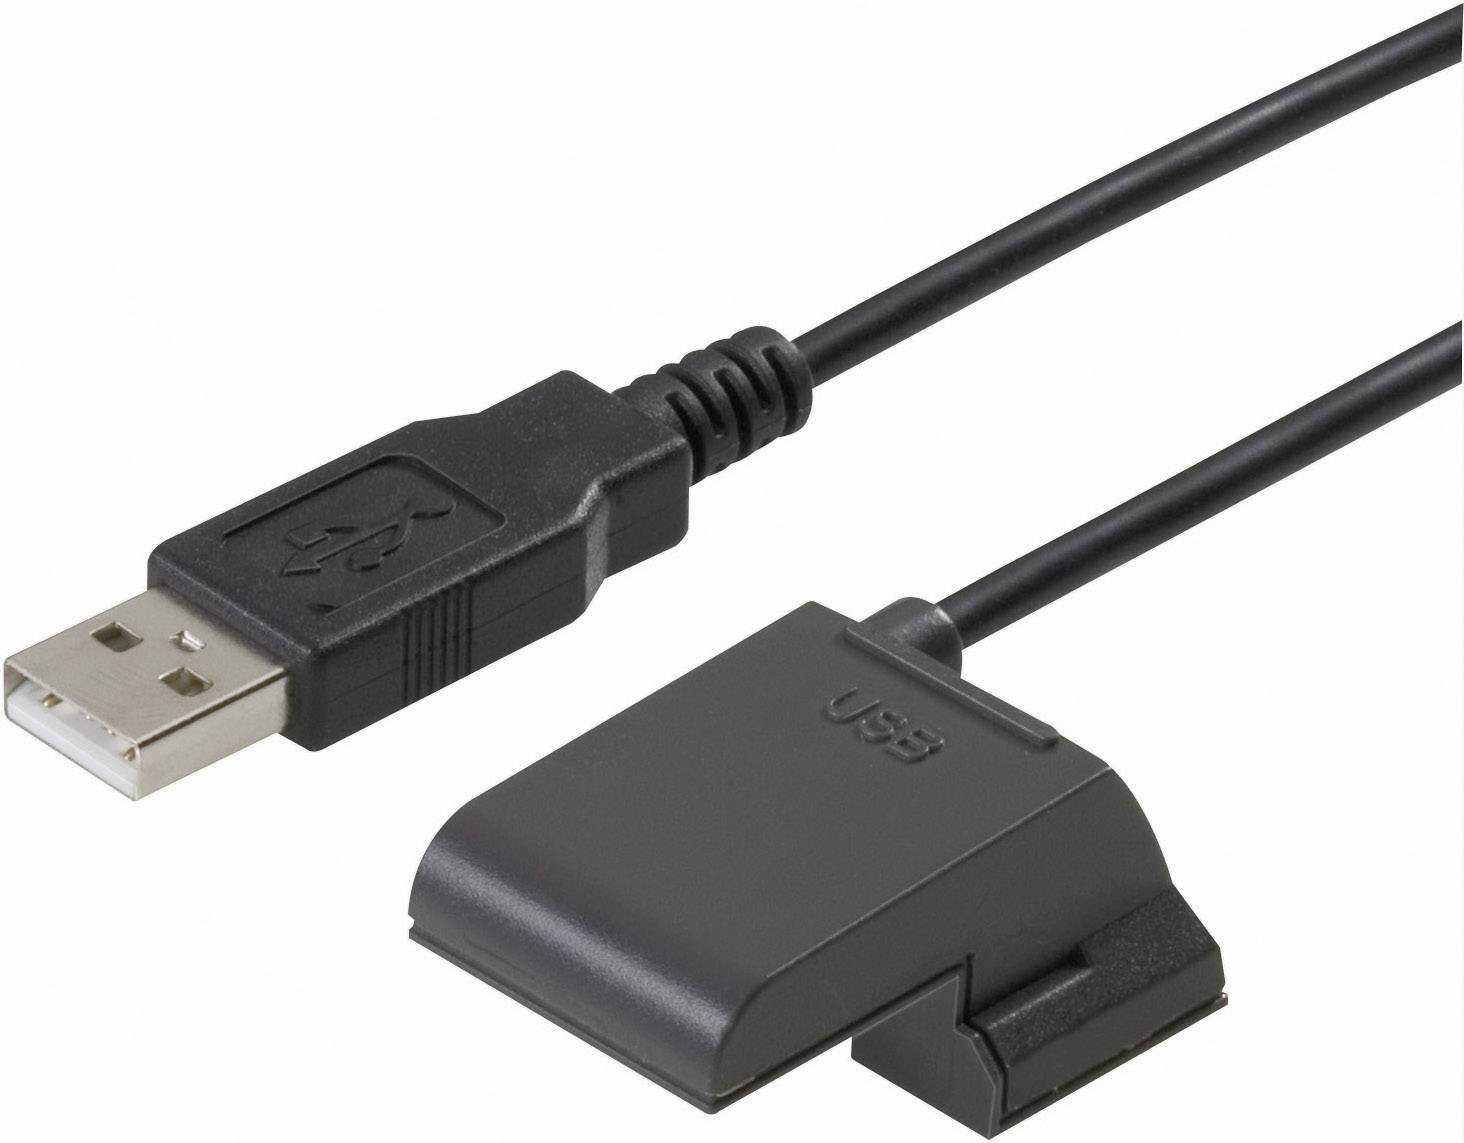 VOLTCRAFT USB-Schnittstellenadapter Passend für Digital-Multimeter VC820, VC830, VC840, VC850, VC8